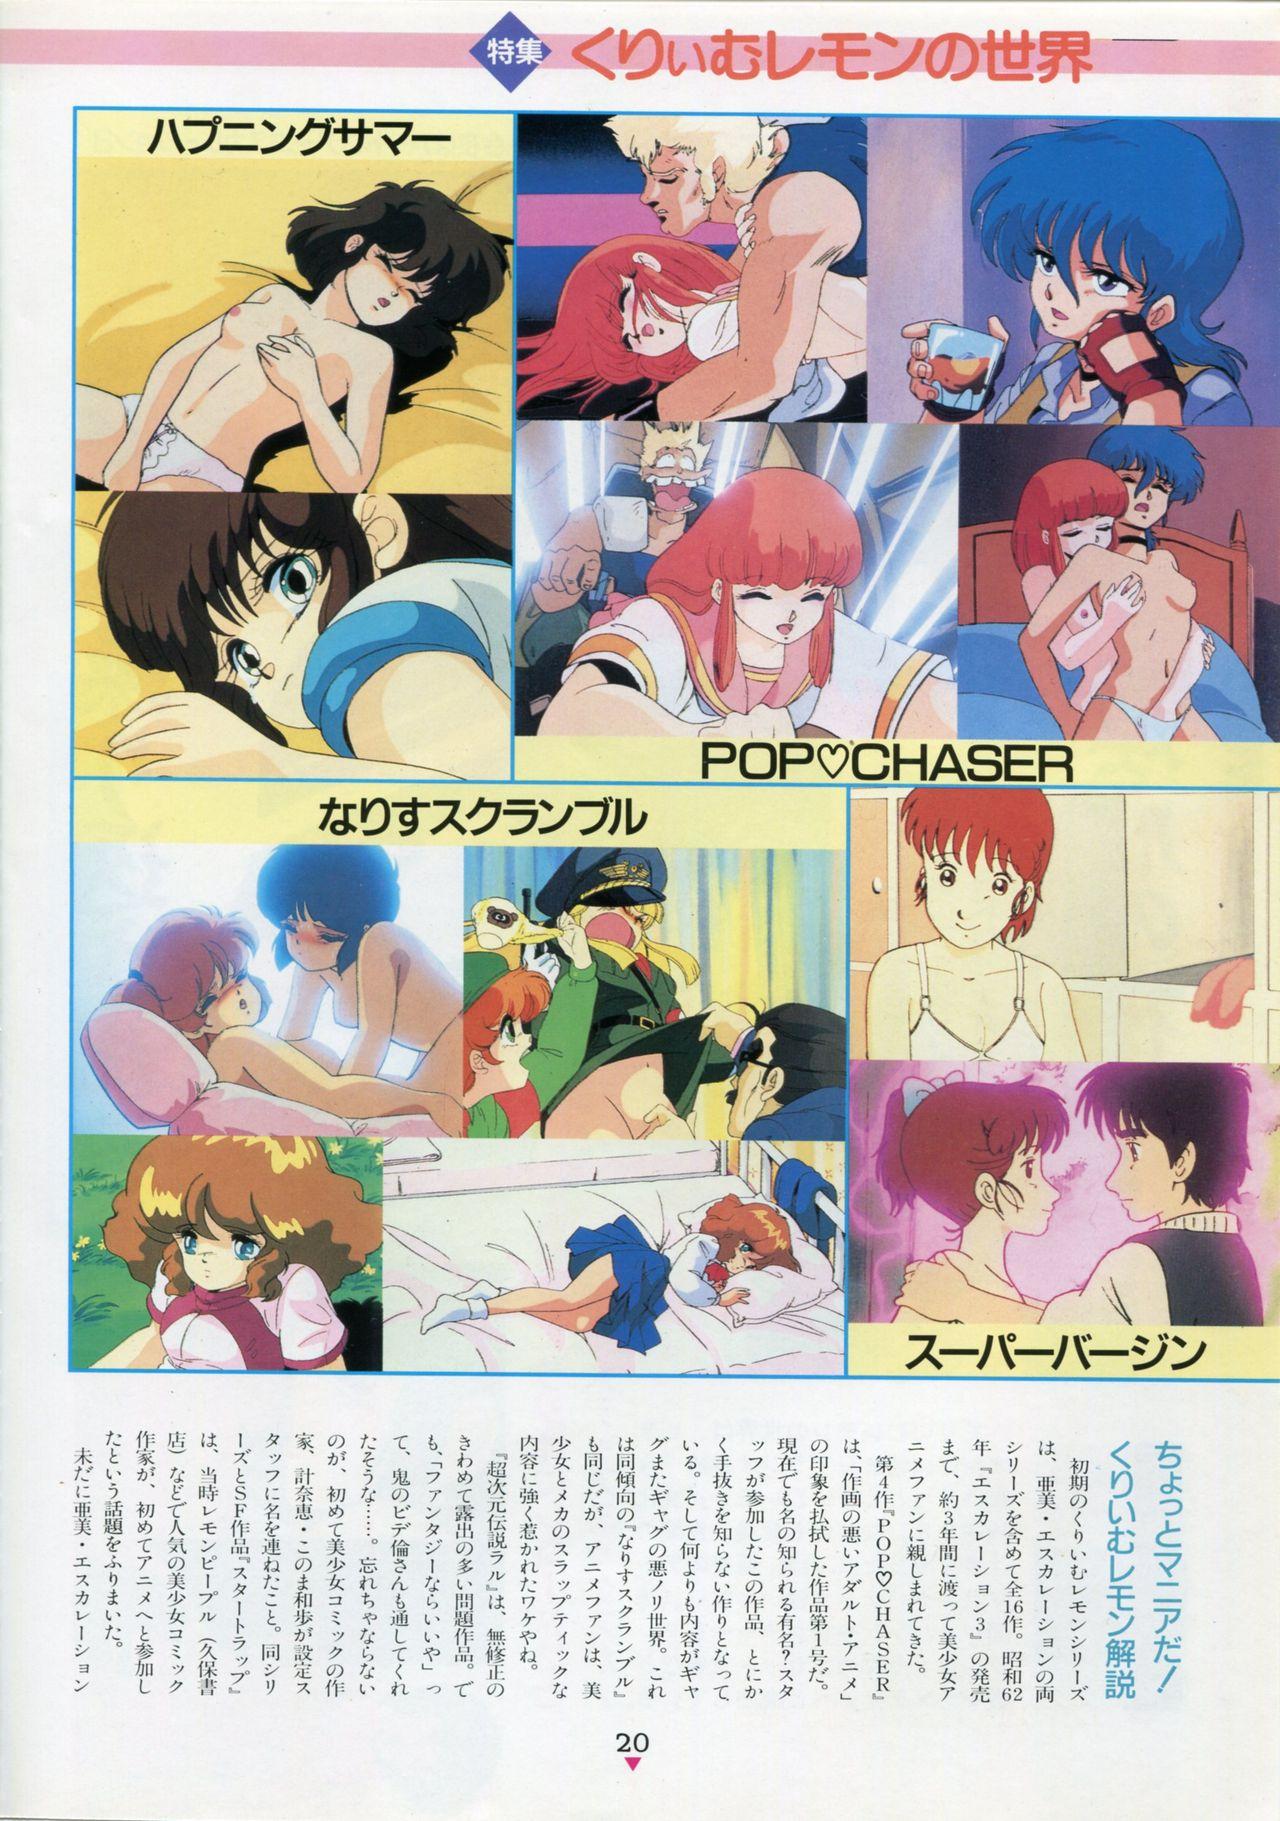 Bishoujo Anime Daizenshuu - Adult Animation Video Catalog 1991 15